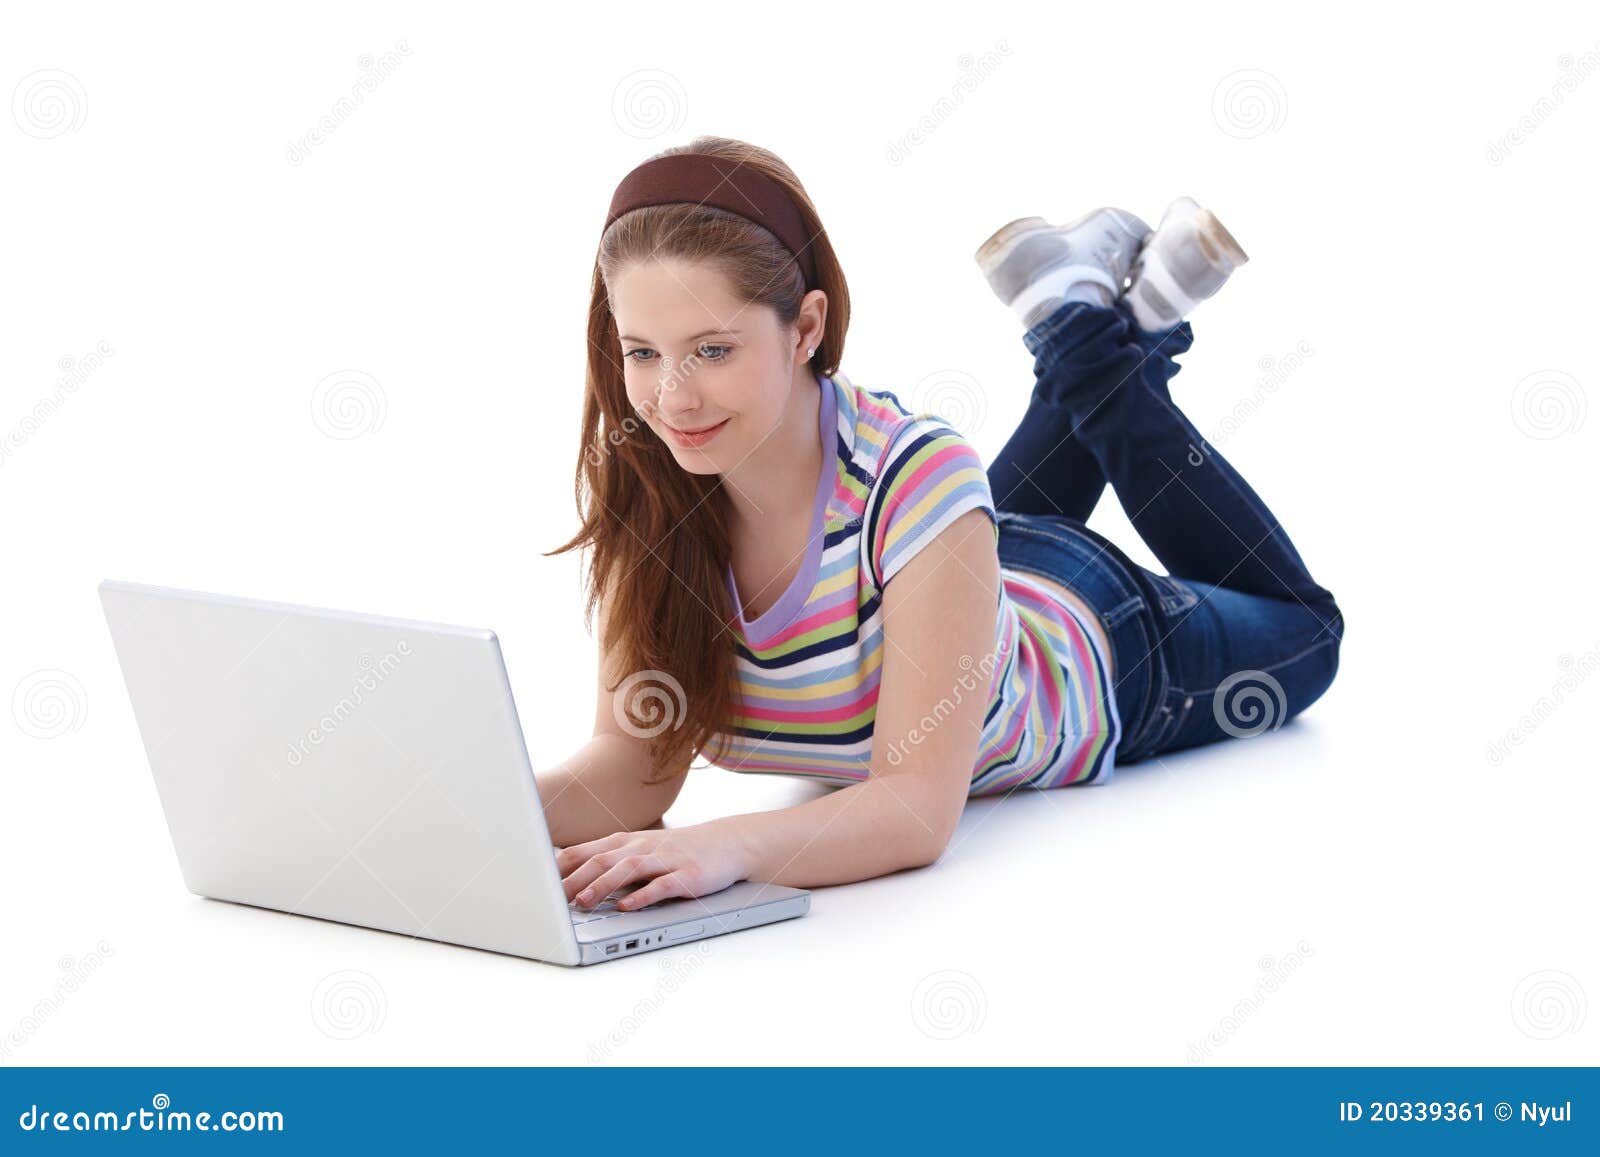 pretty schoolgirl browsing internet smiling